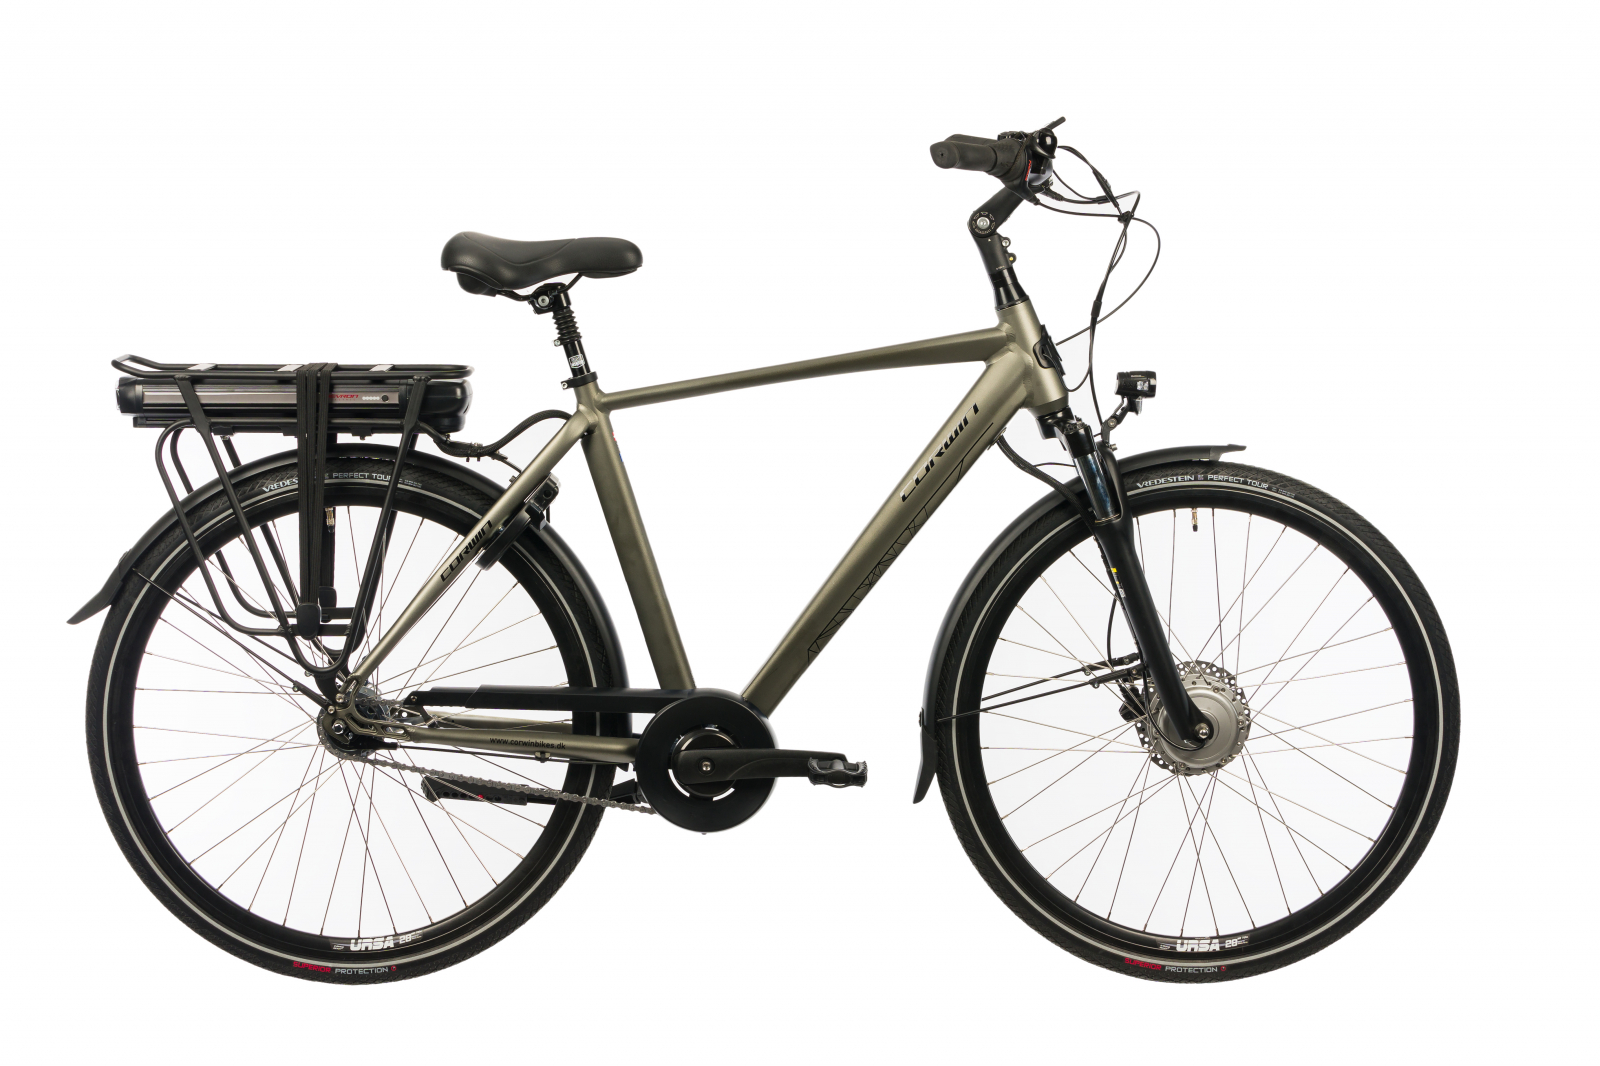 Bicicleta Electrica Corwin 28327 - 28 Inch, 530mm, Gri